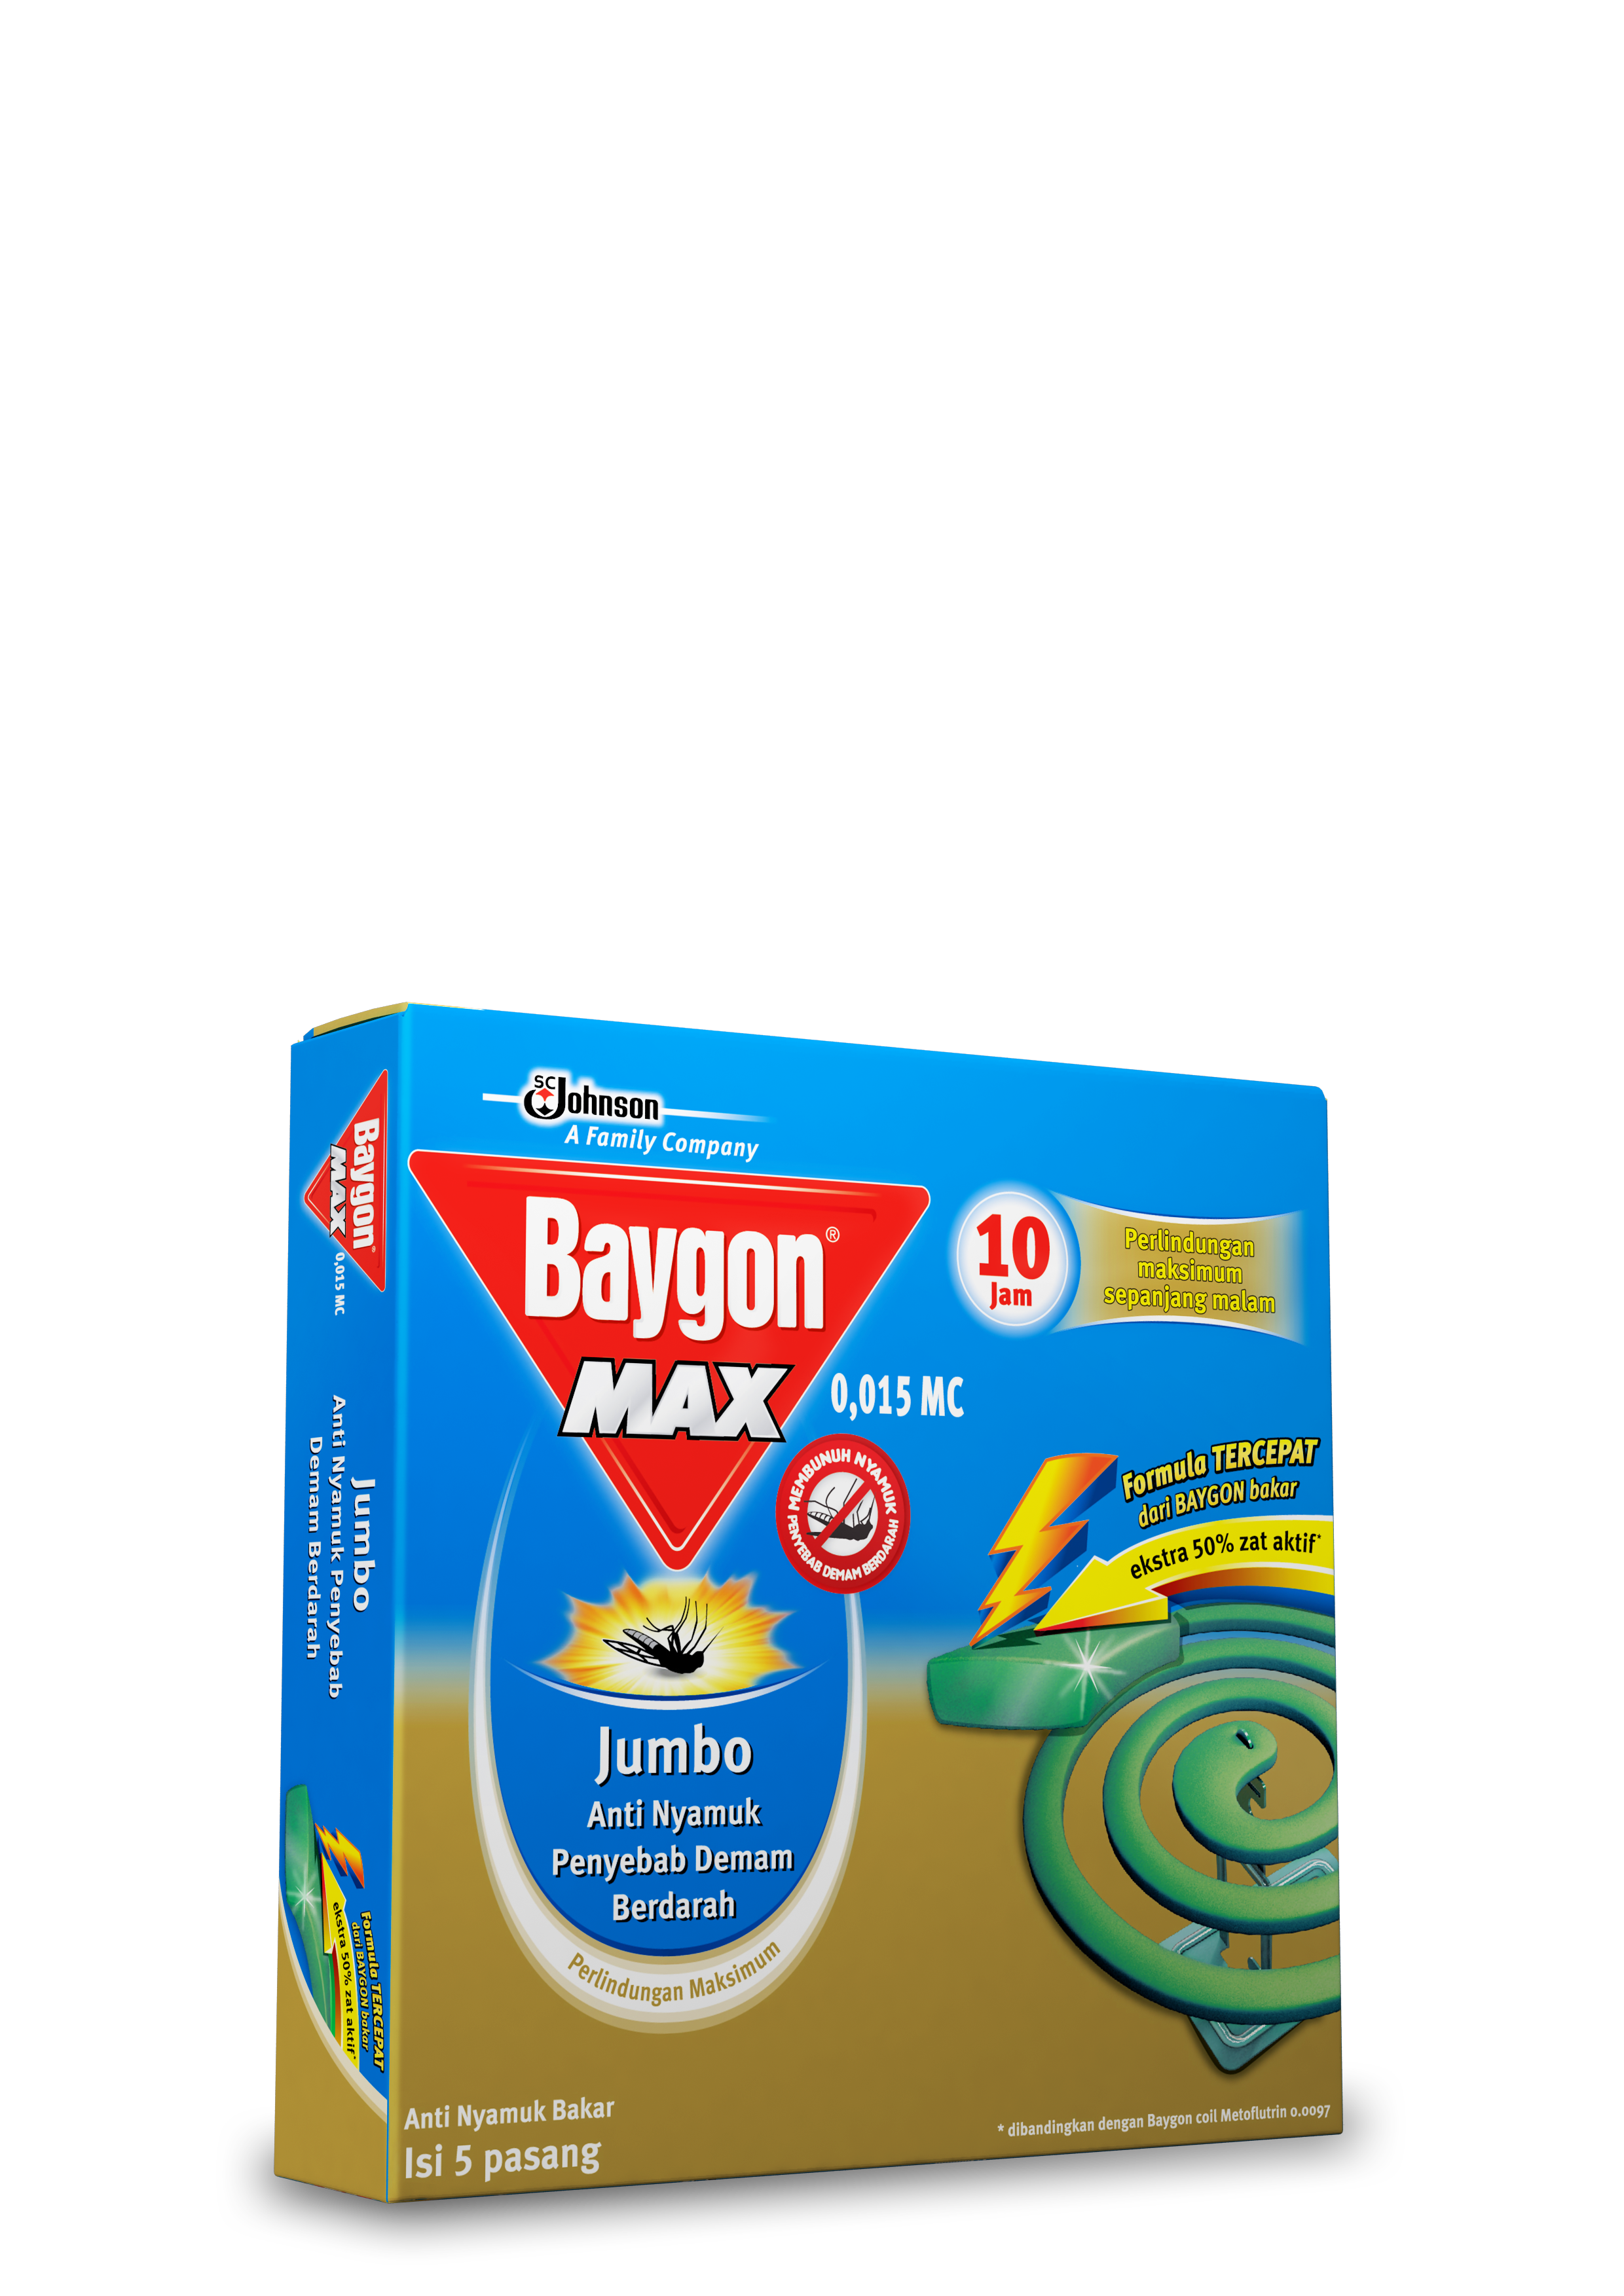 Baygon® MAX Anti Nyamuk Bakar Jumbo Hijau 10 Jam